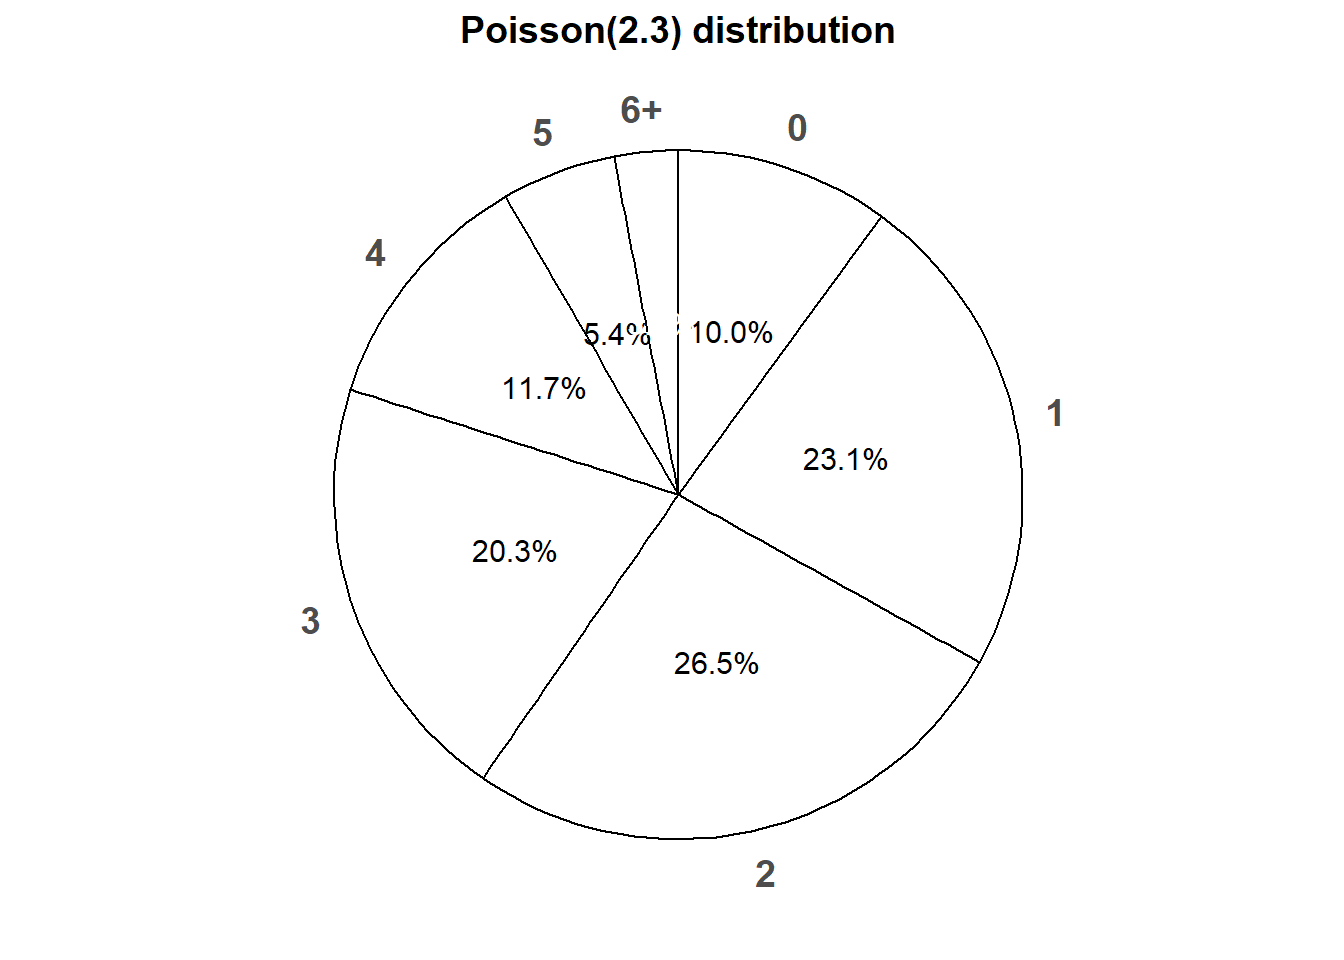 Spinner corresponding to the Poisson(2.3) distribution.